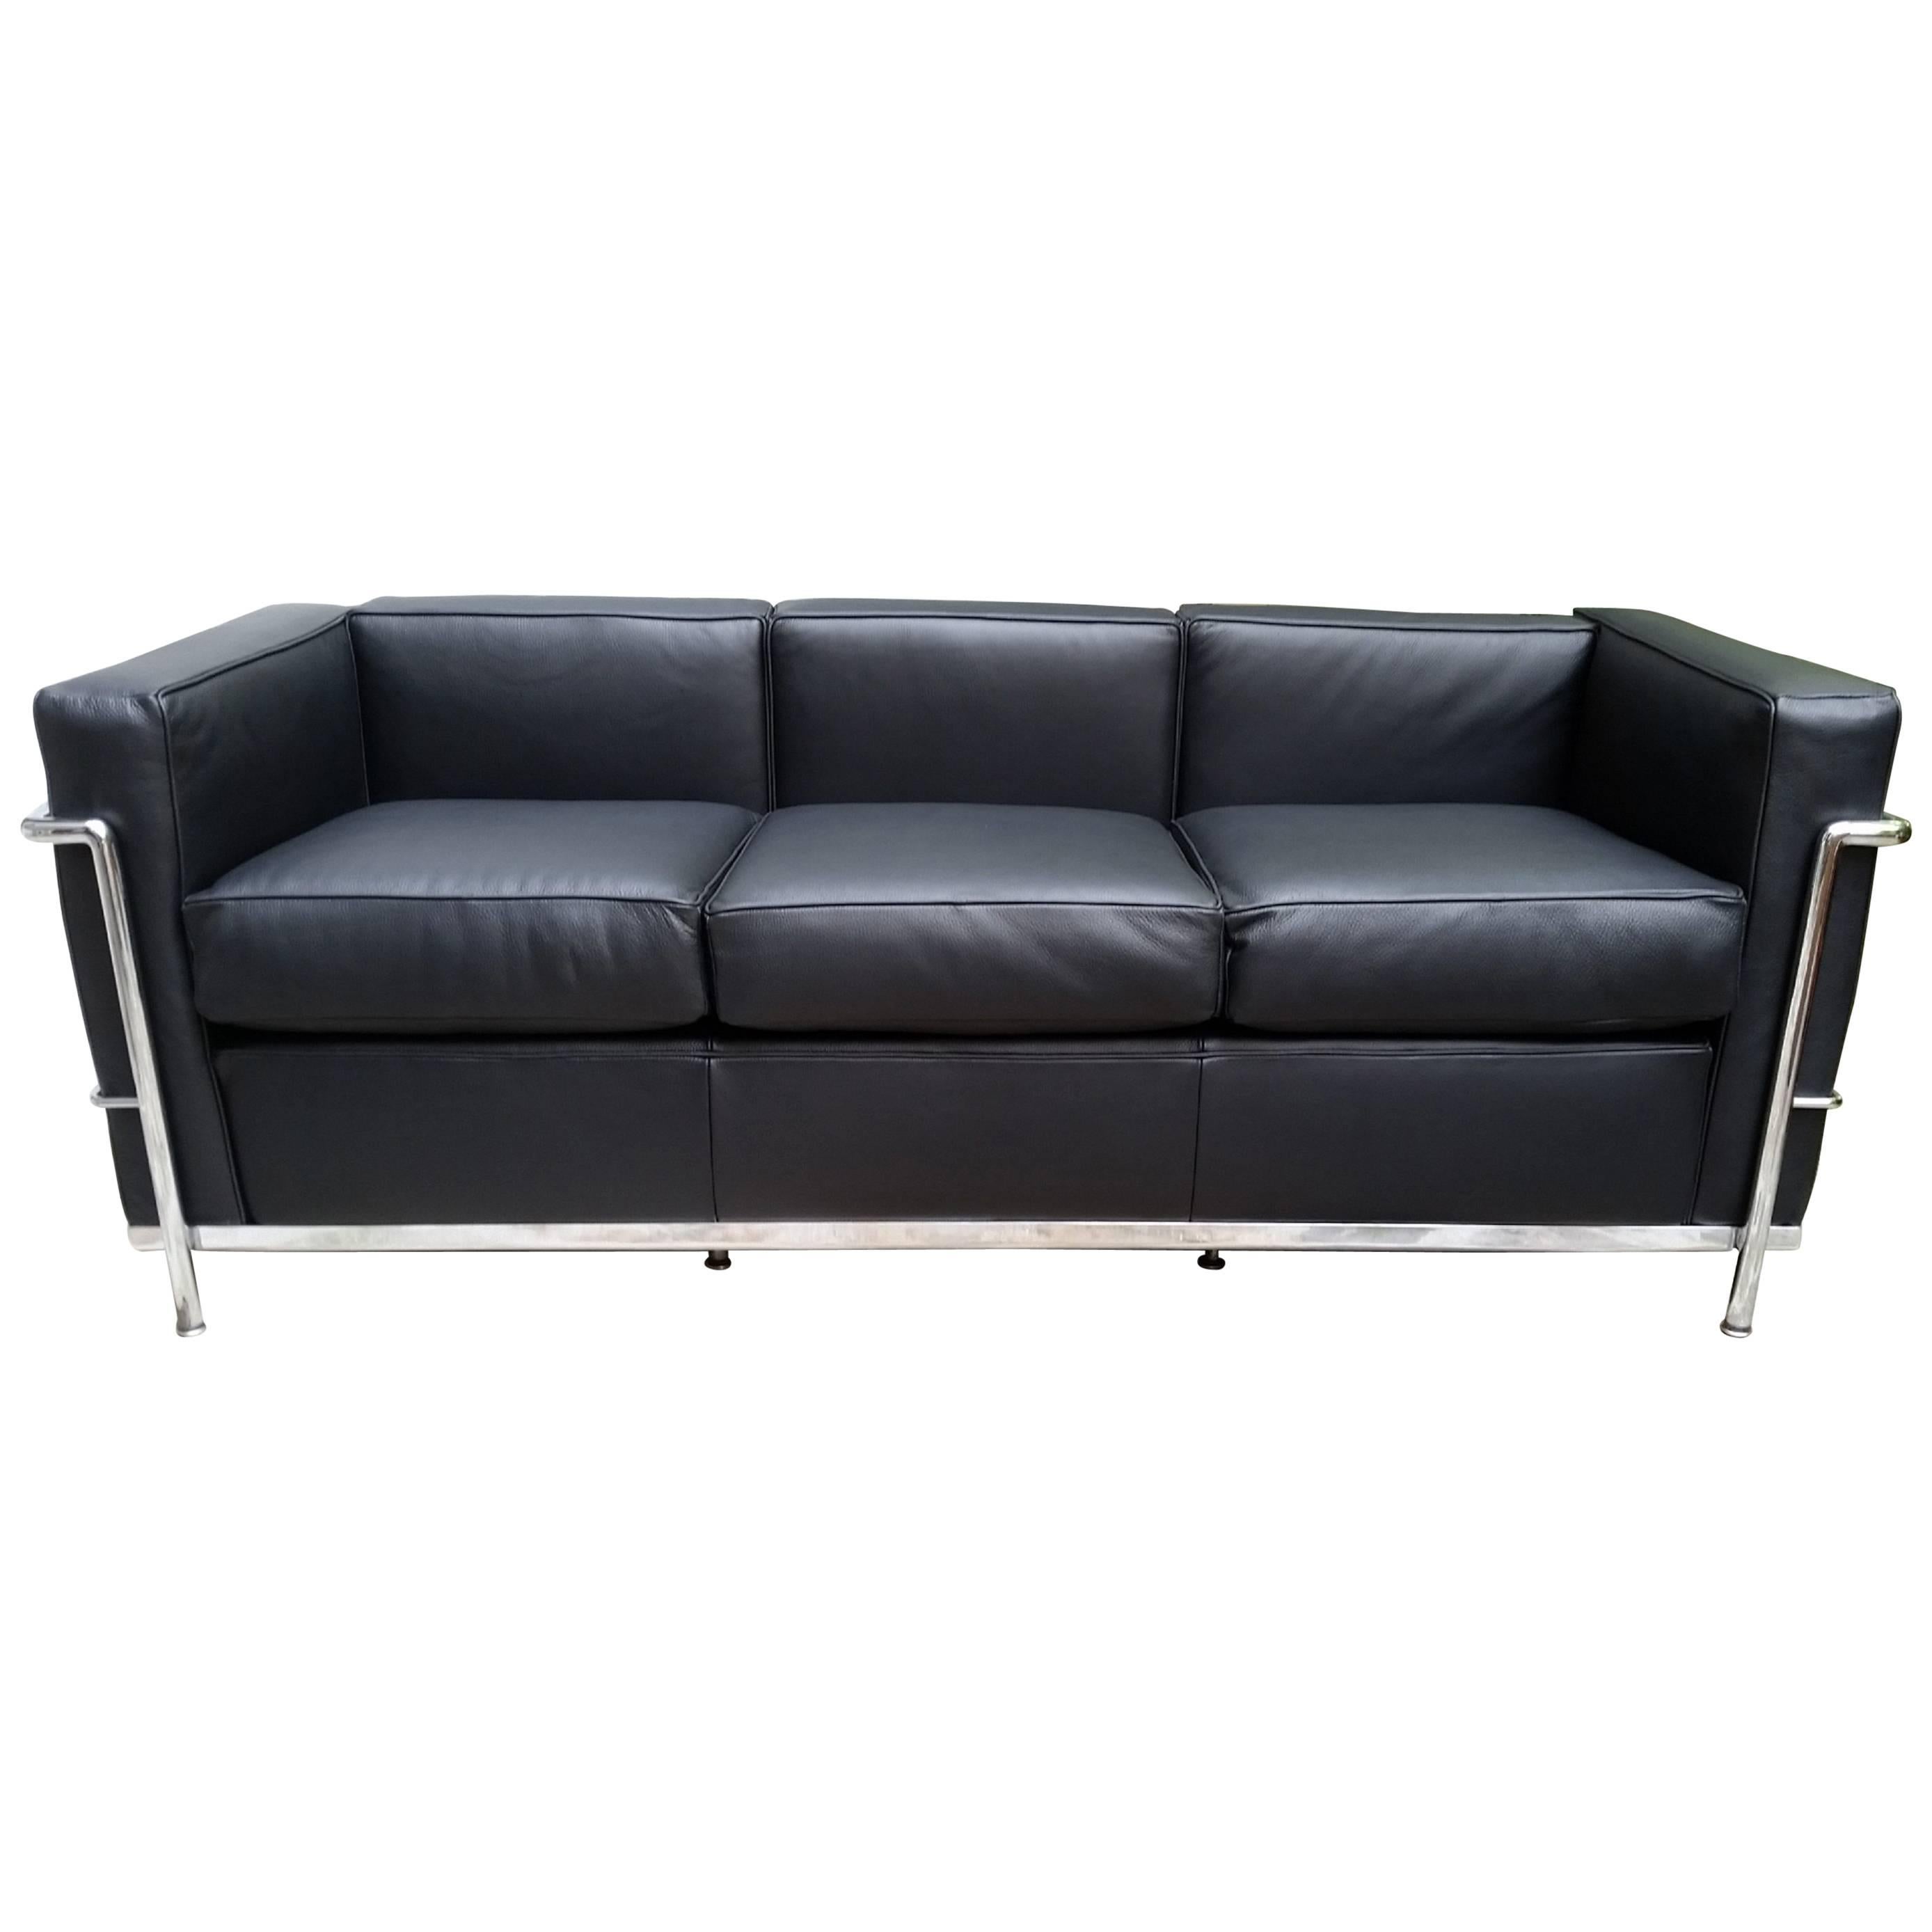 LC2 Le Corbusier Three-Seat Sofa in Black Leather Grained